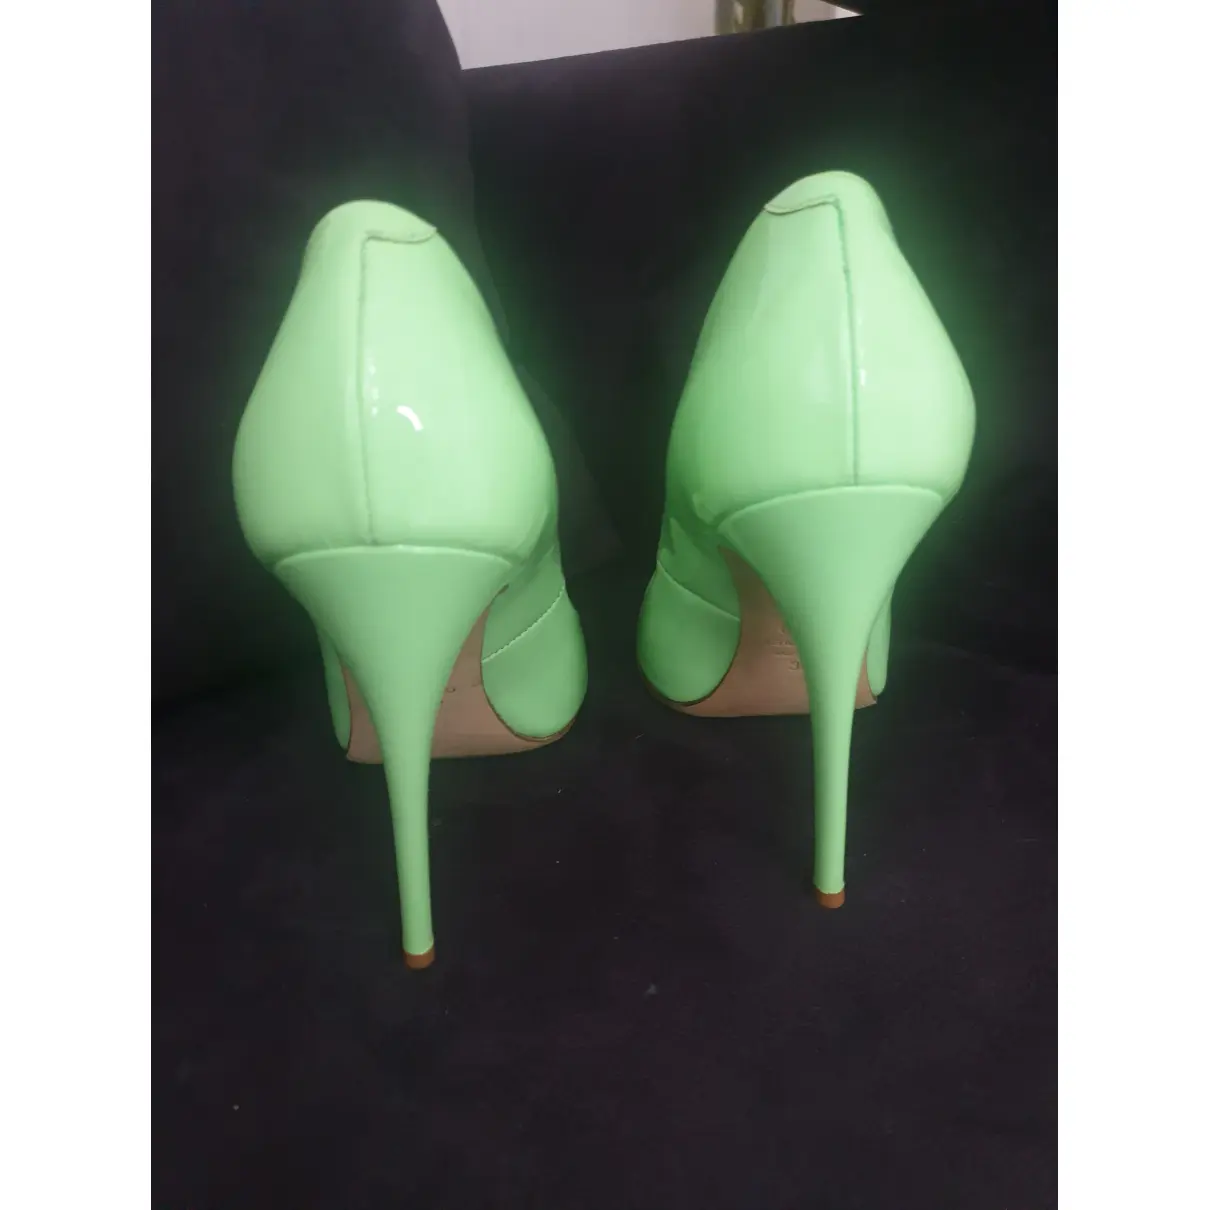 Buy Giuseppe Zanotti Patent leather heels online